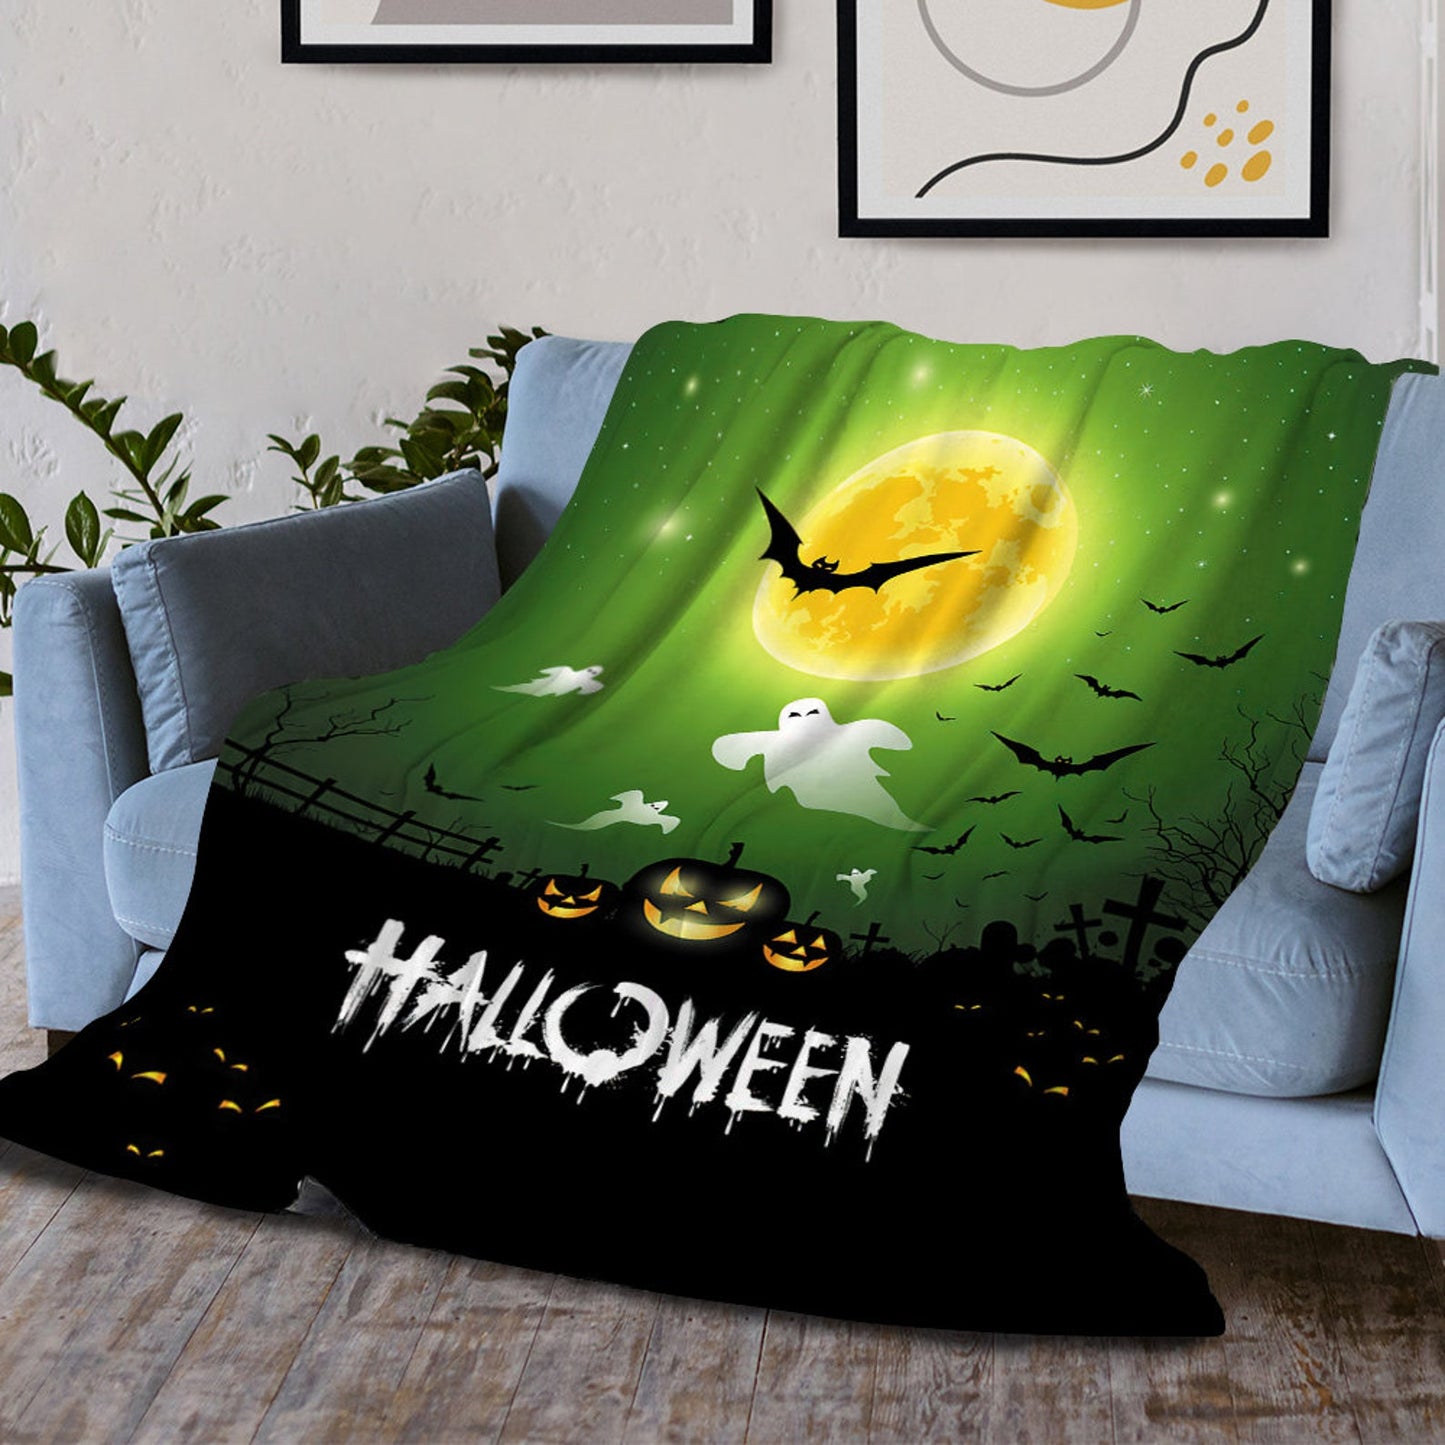 Halloween Blanket, Pumpkin Blanket, Bat Blanket, Spider Blanket, Halloween Home Decor, Green Black Blanket Gift